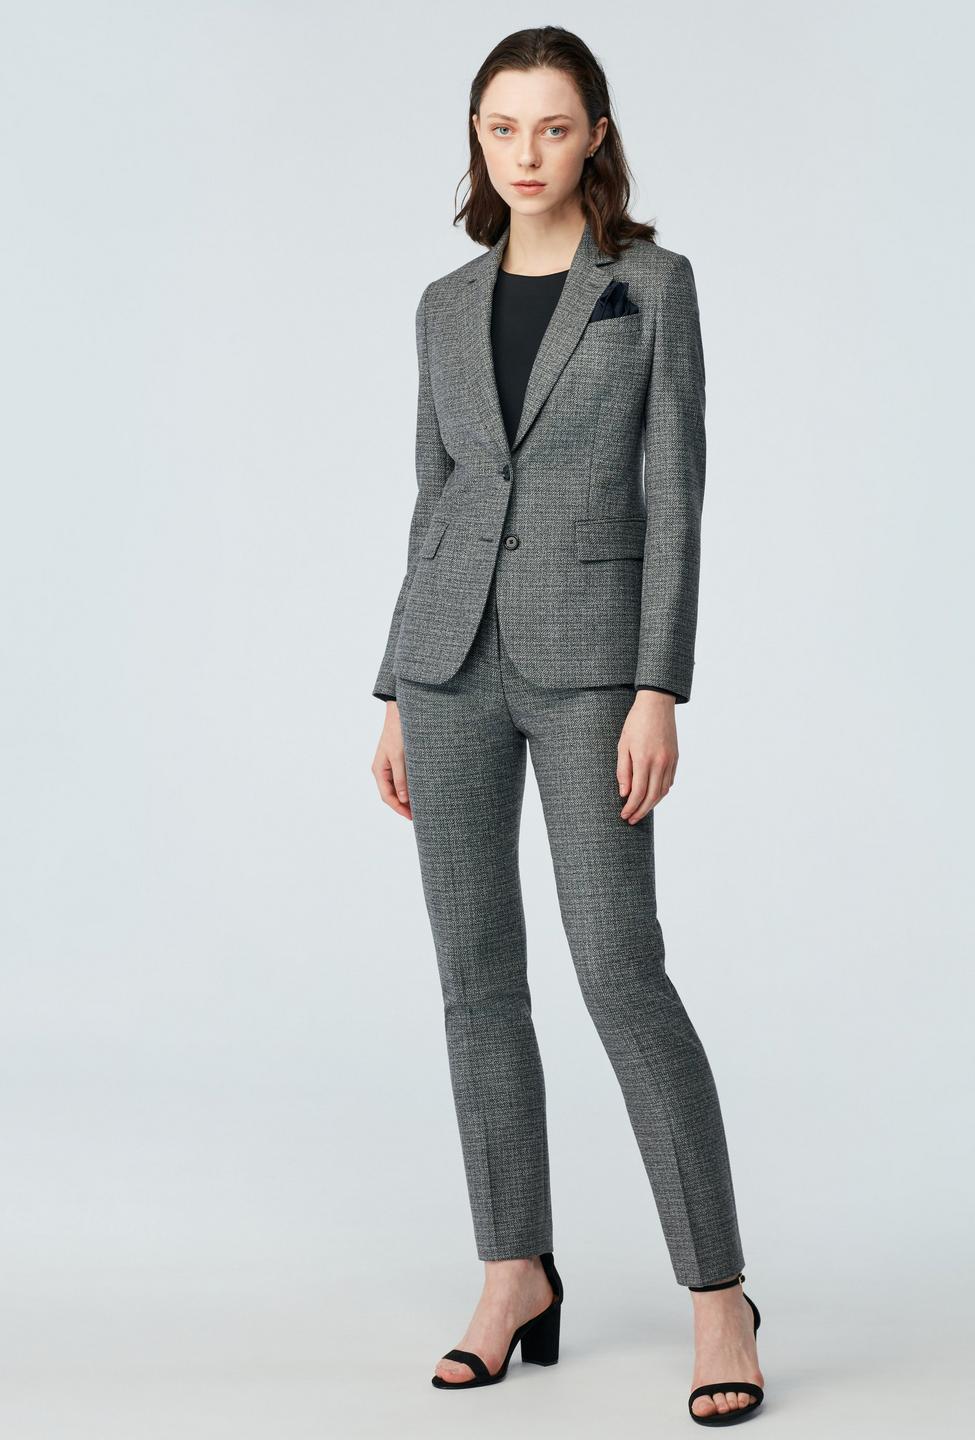 Newbridge Tweed Wool Stretch Light Gray Suit